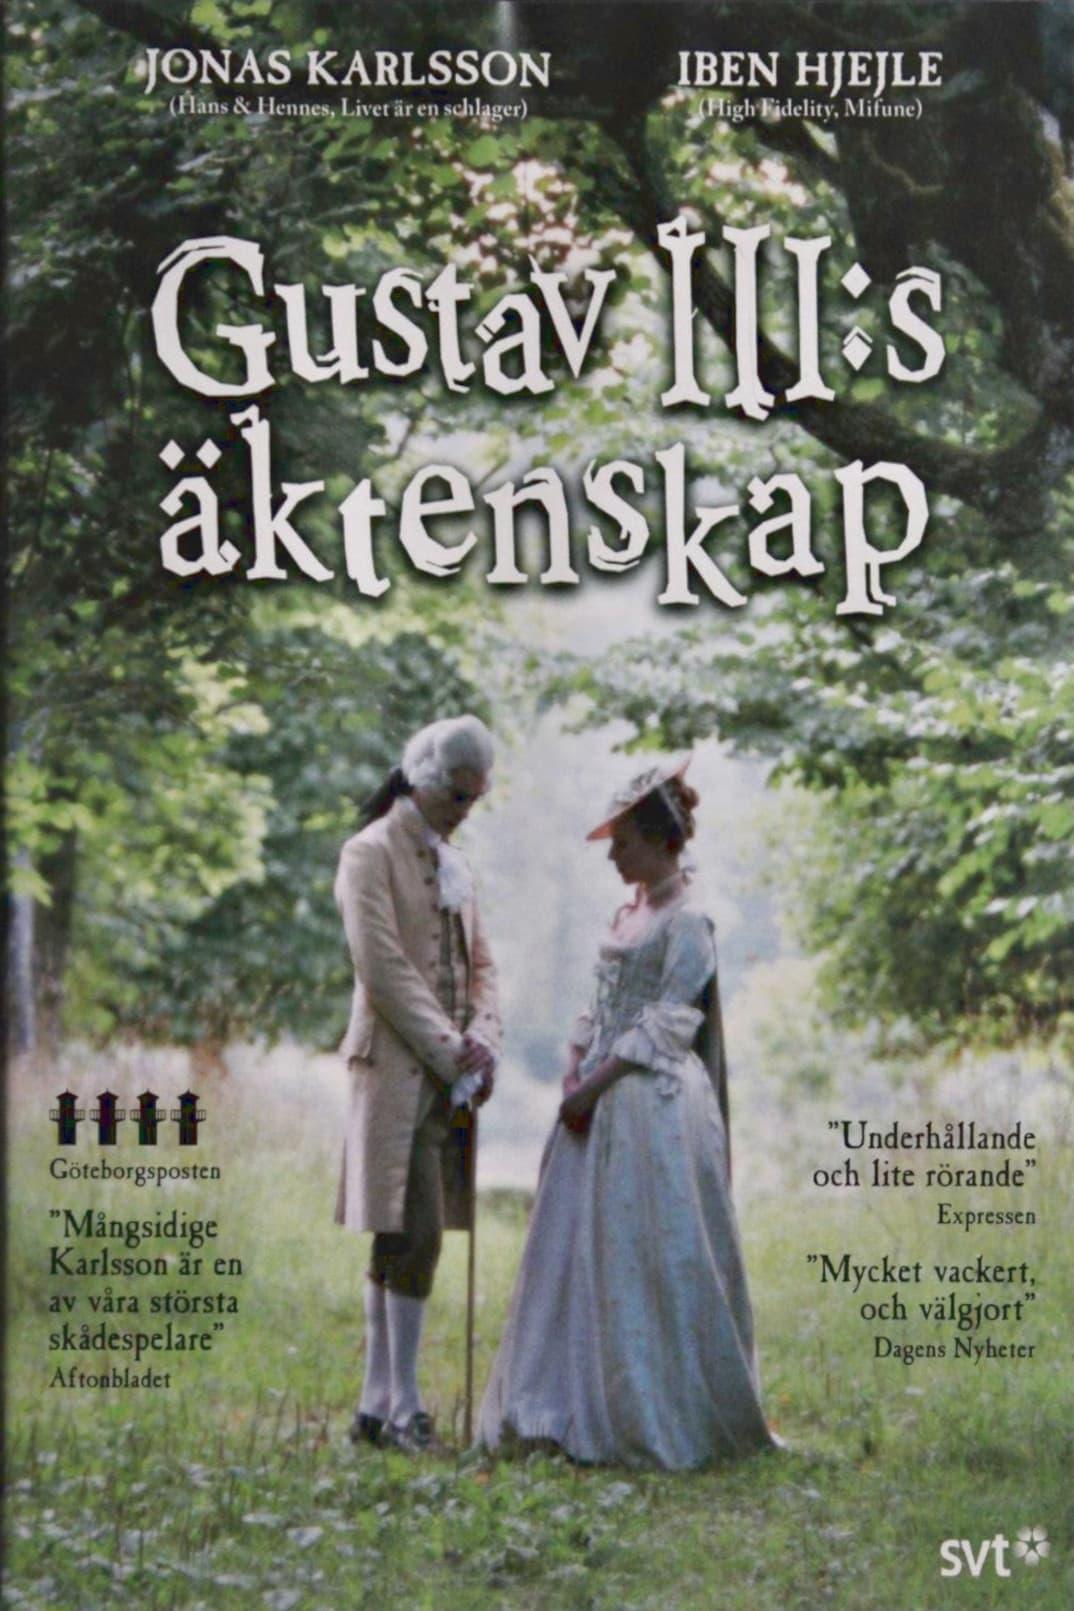 Gustav III:s Äktenskap poster